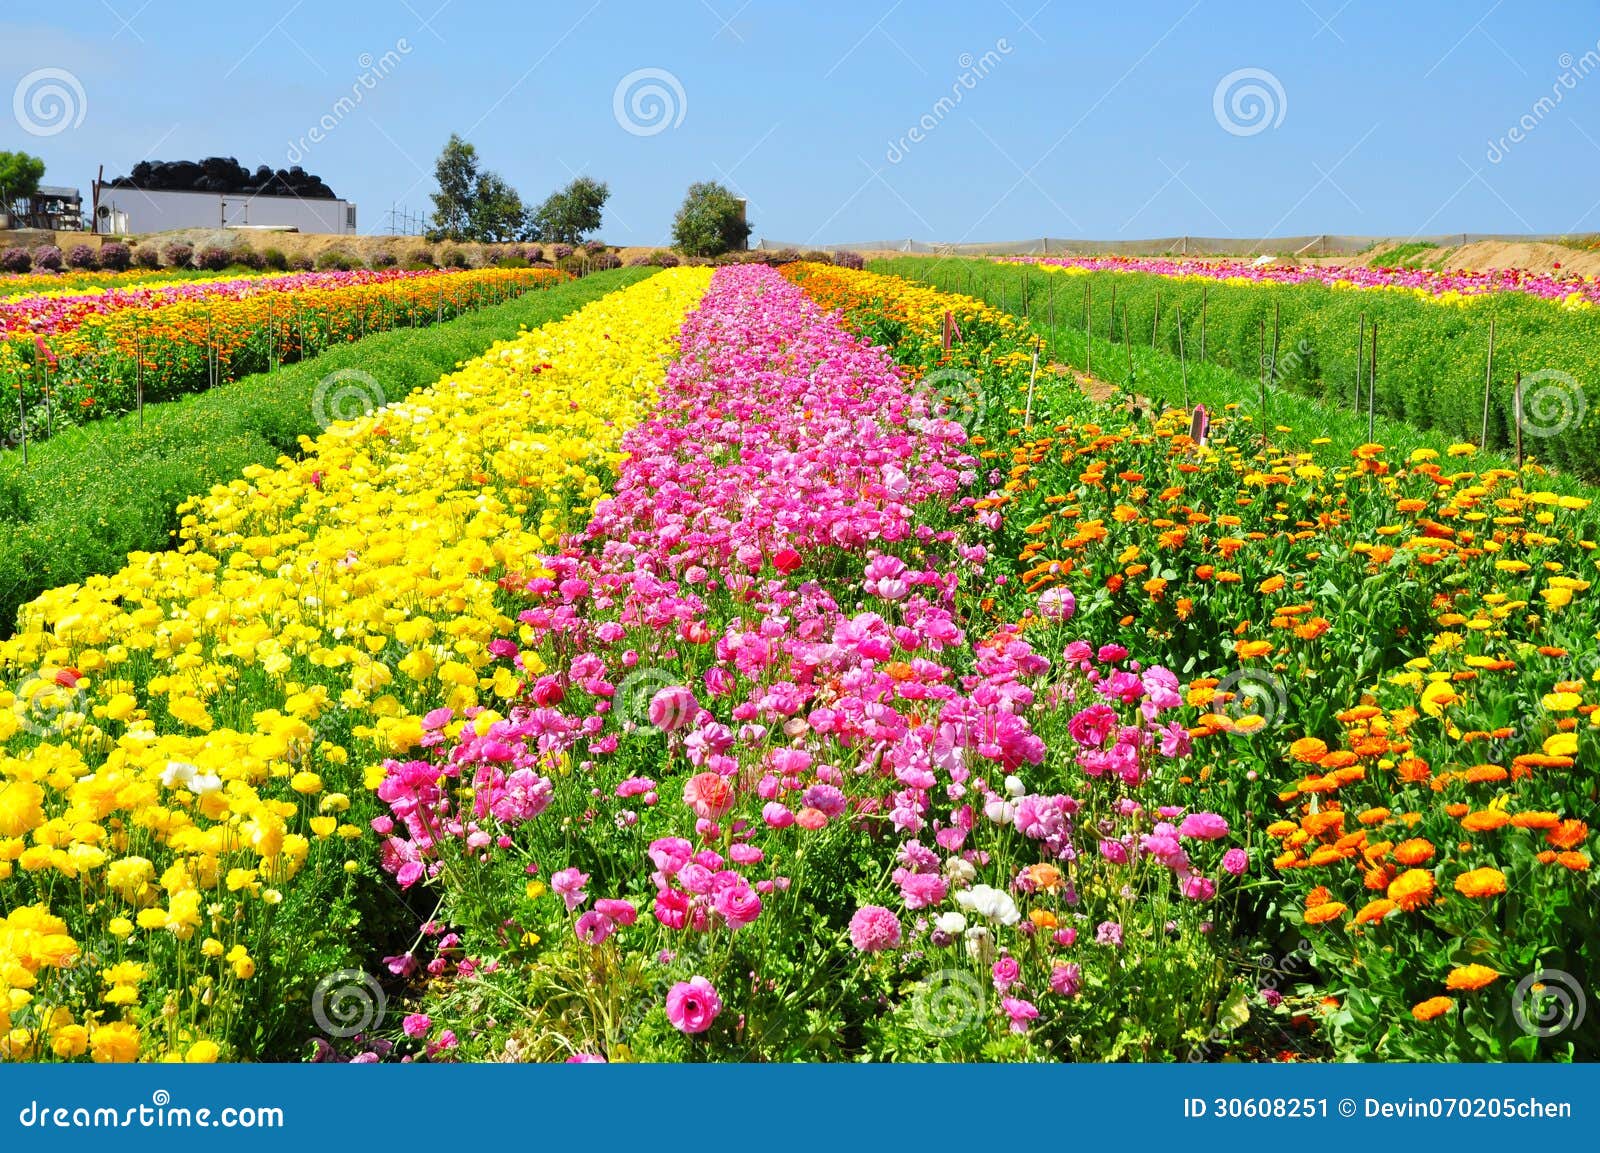 the flower fields of carlsbad